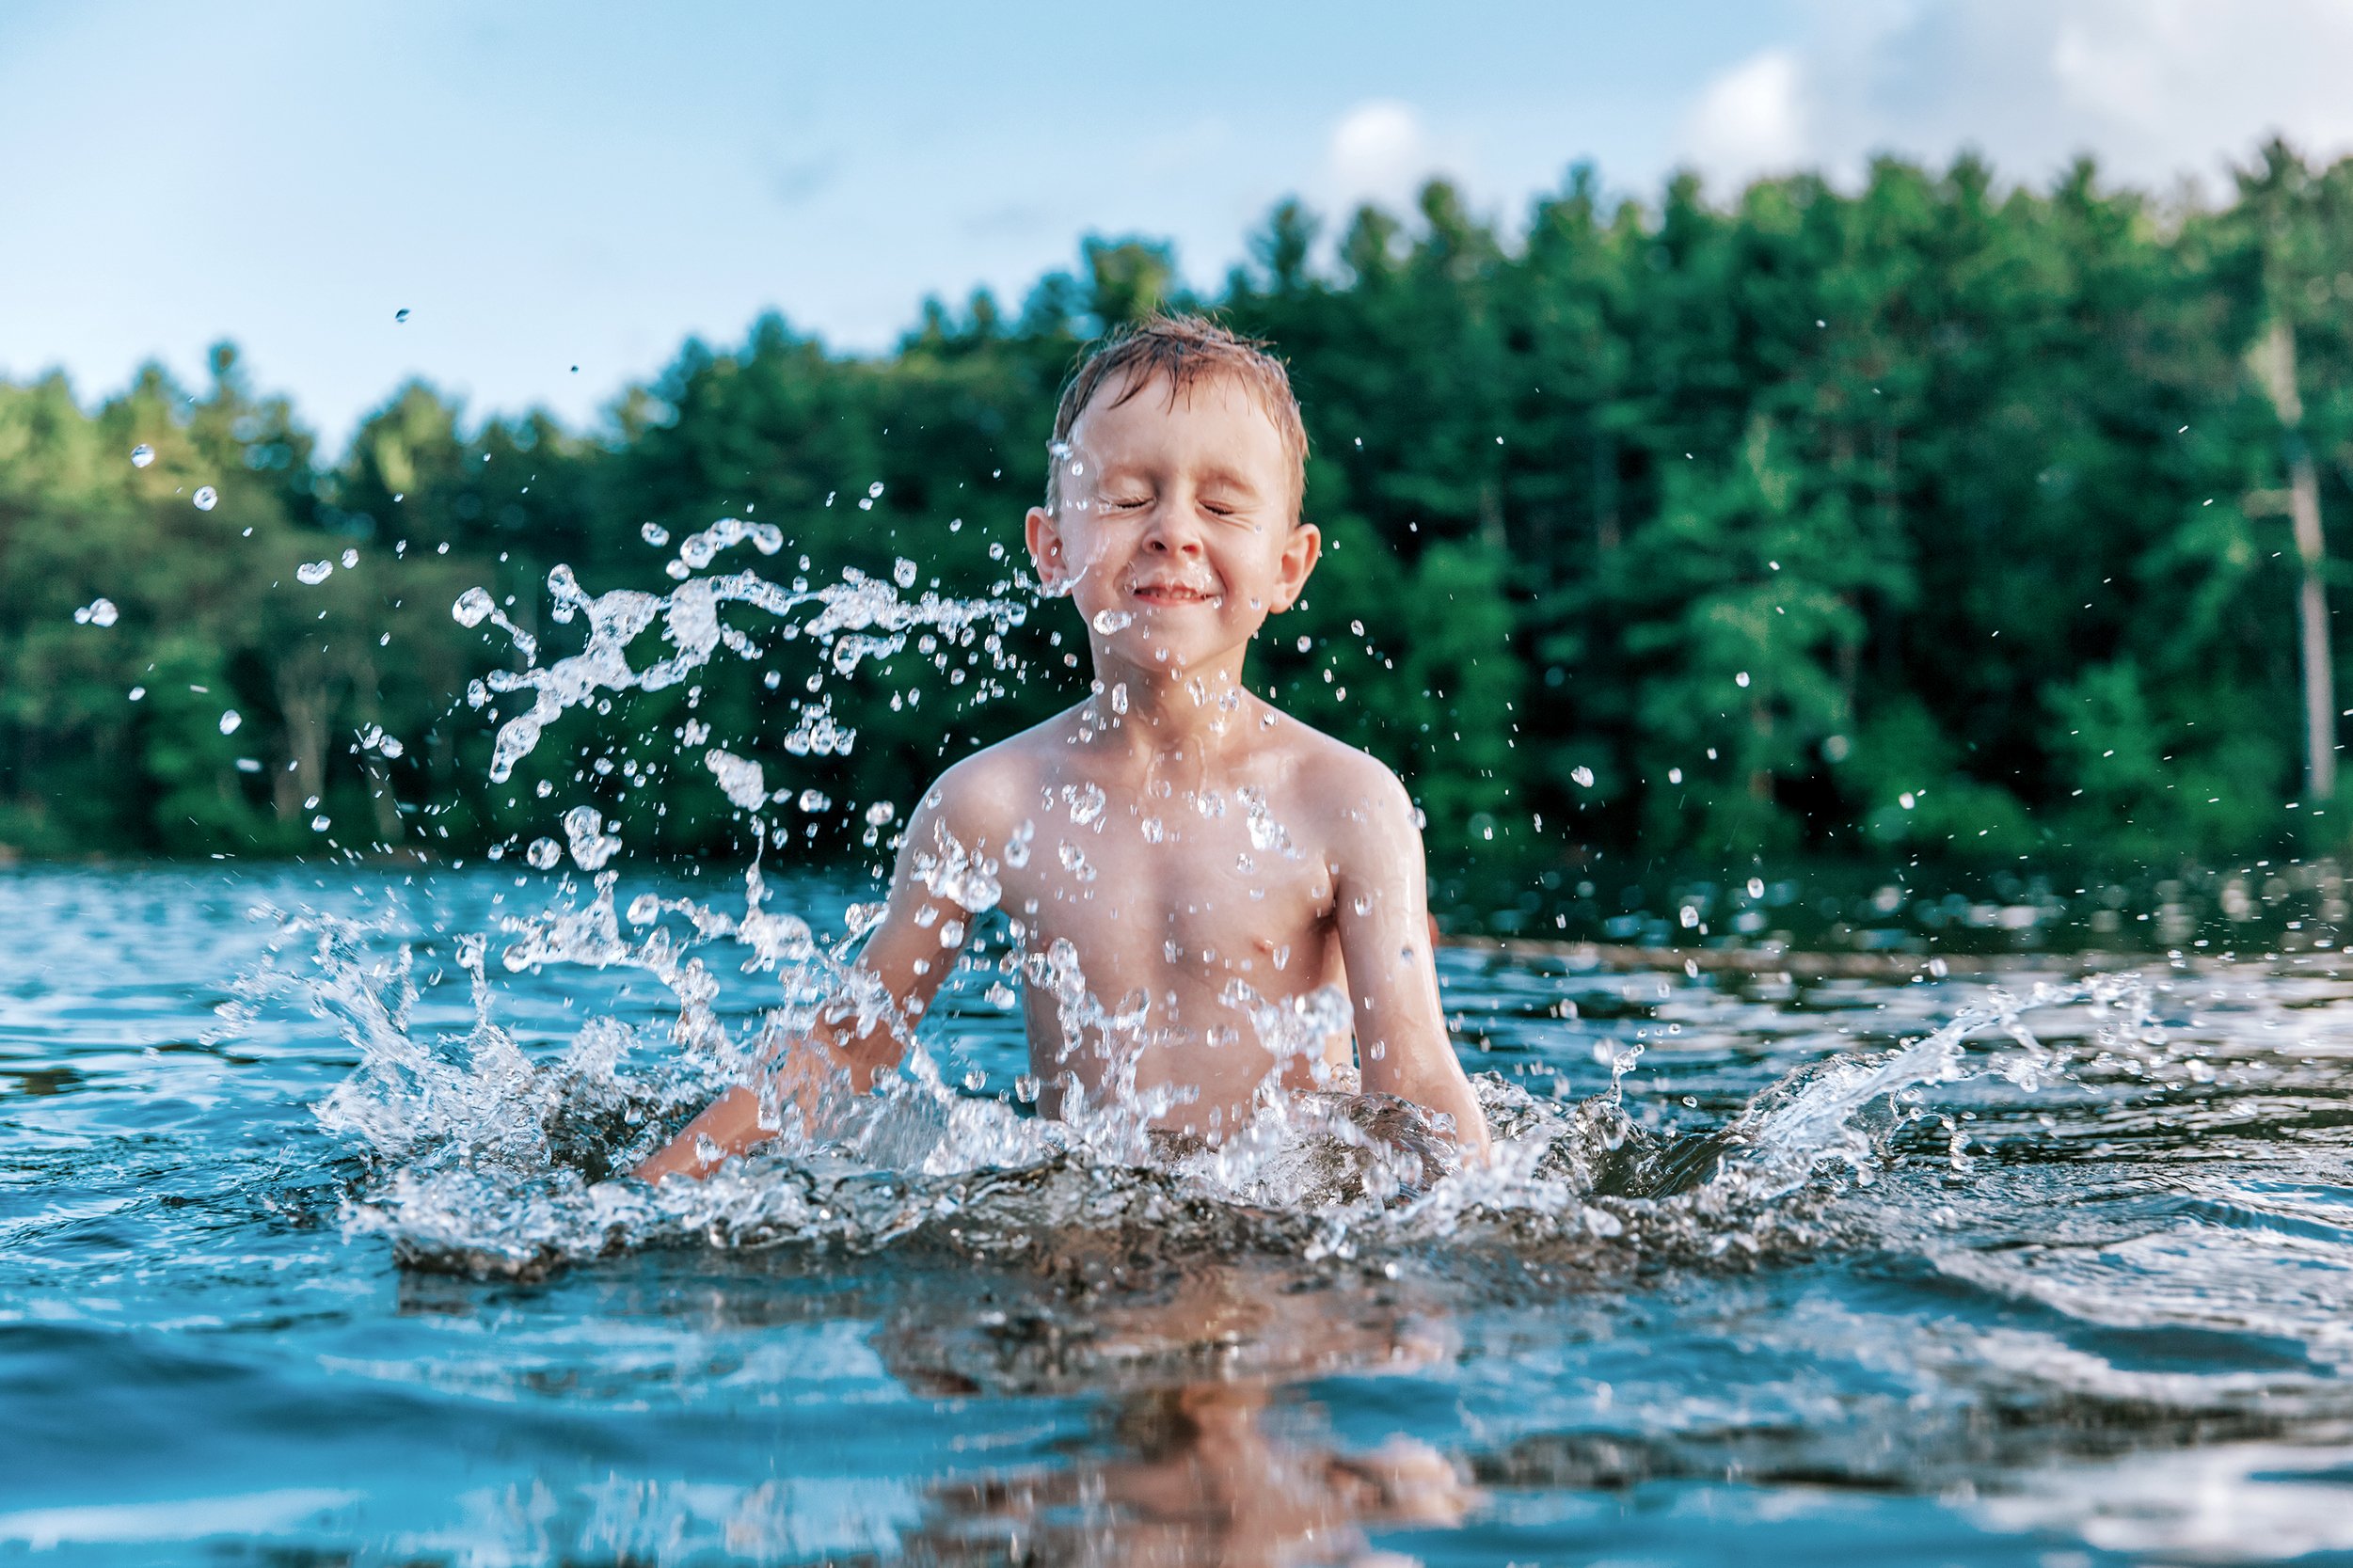 boy splashing in a swimming pond or lake (swimming holes boston massachusetts)